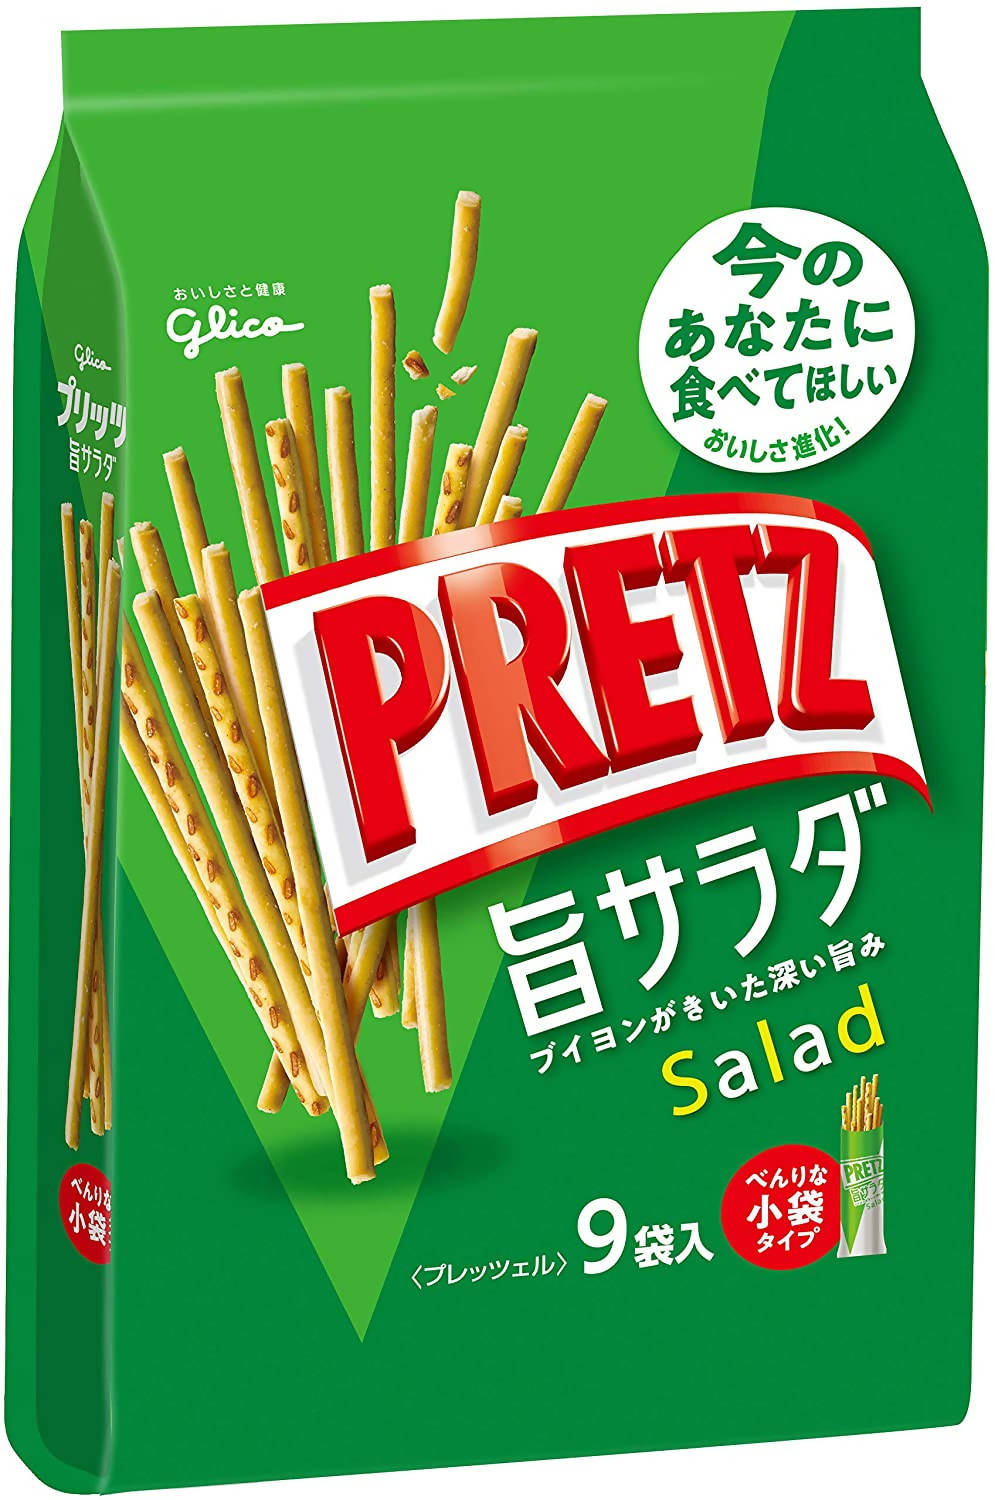 Ezaki Glico Pretz – Salad Flavor – 143g x 5